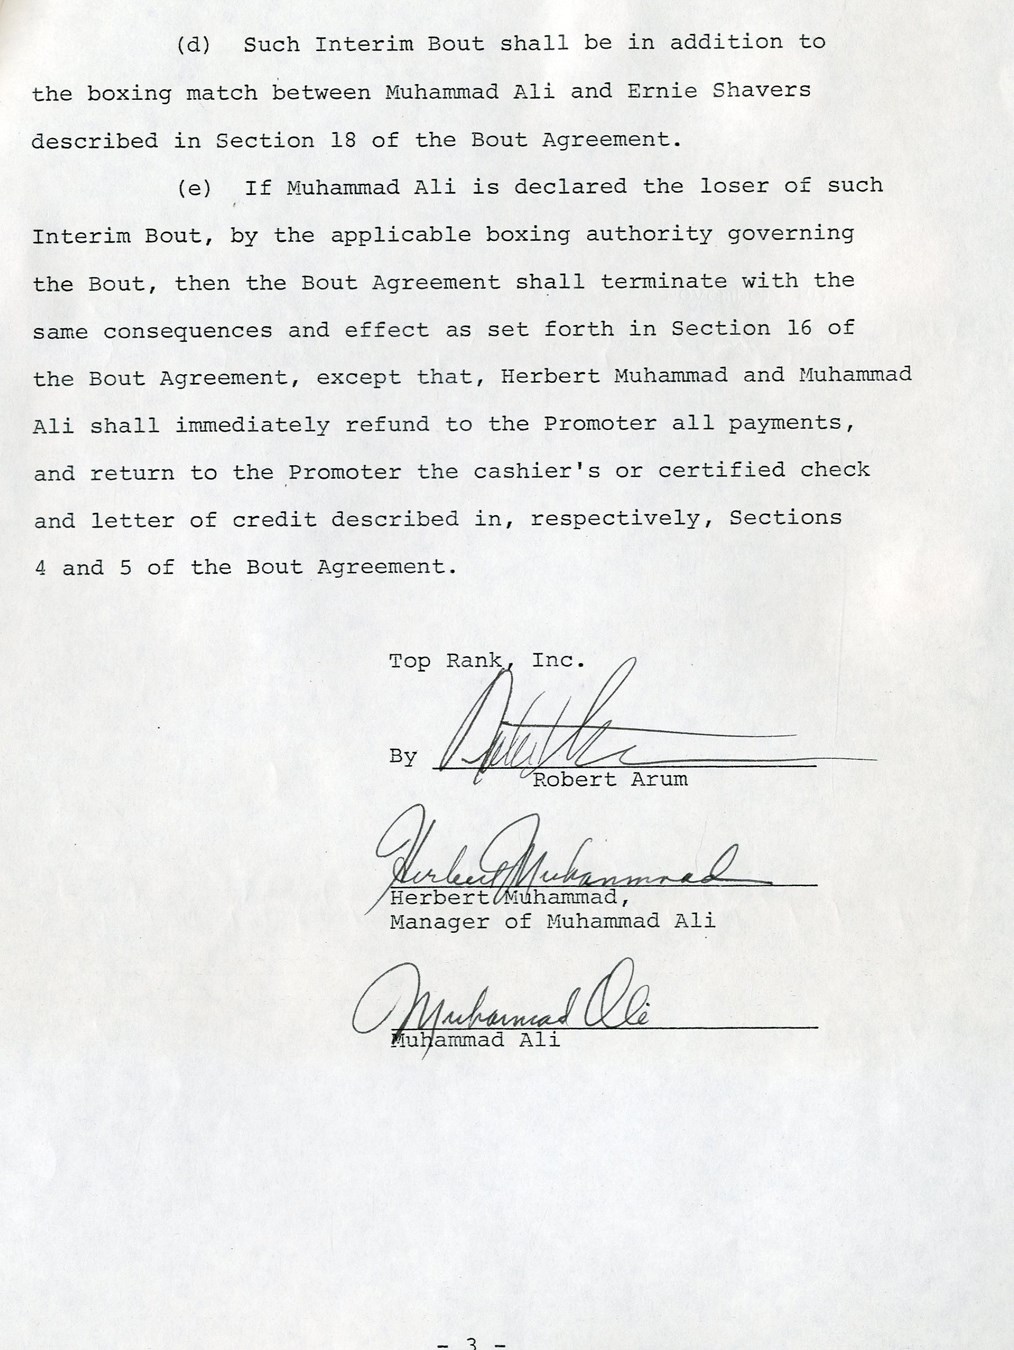 Muhammad Ali & Boxing - Muhammad Ali Signed Fight Agreement (1977)